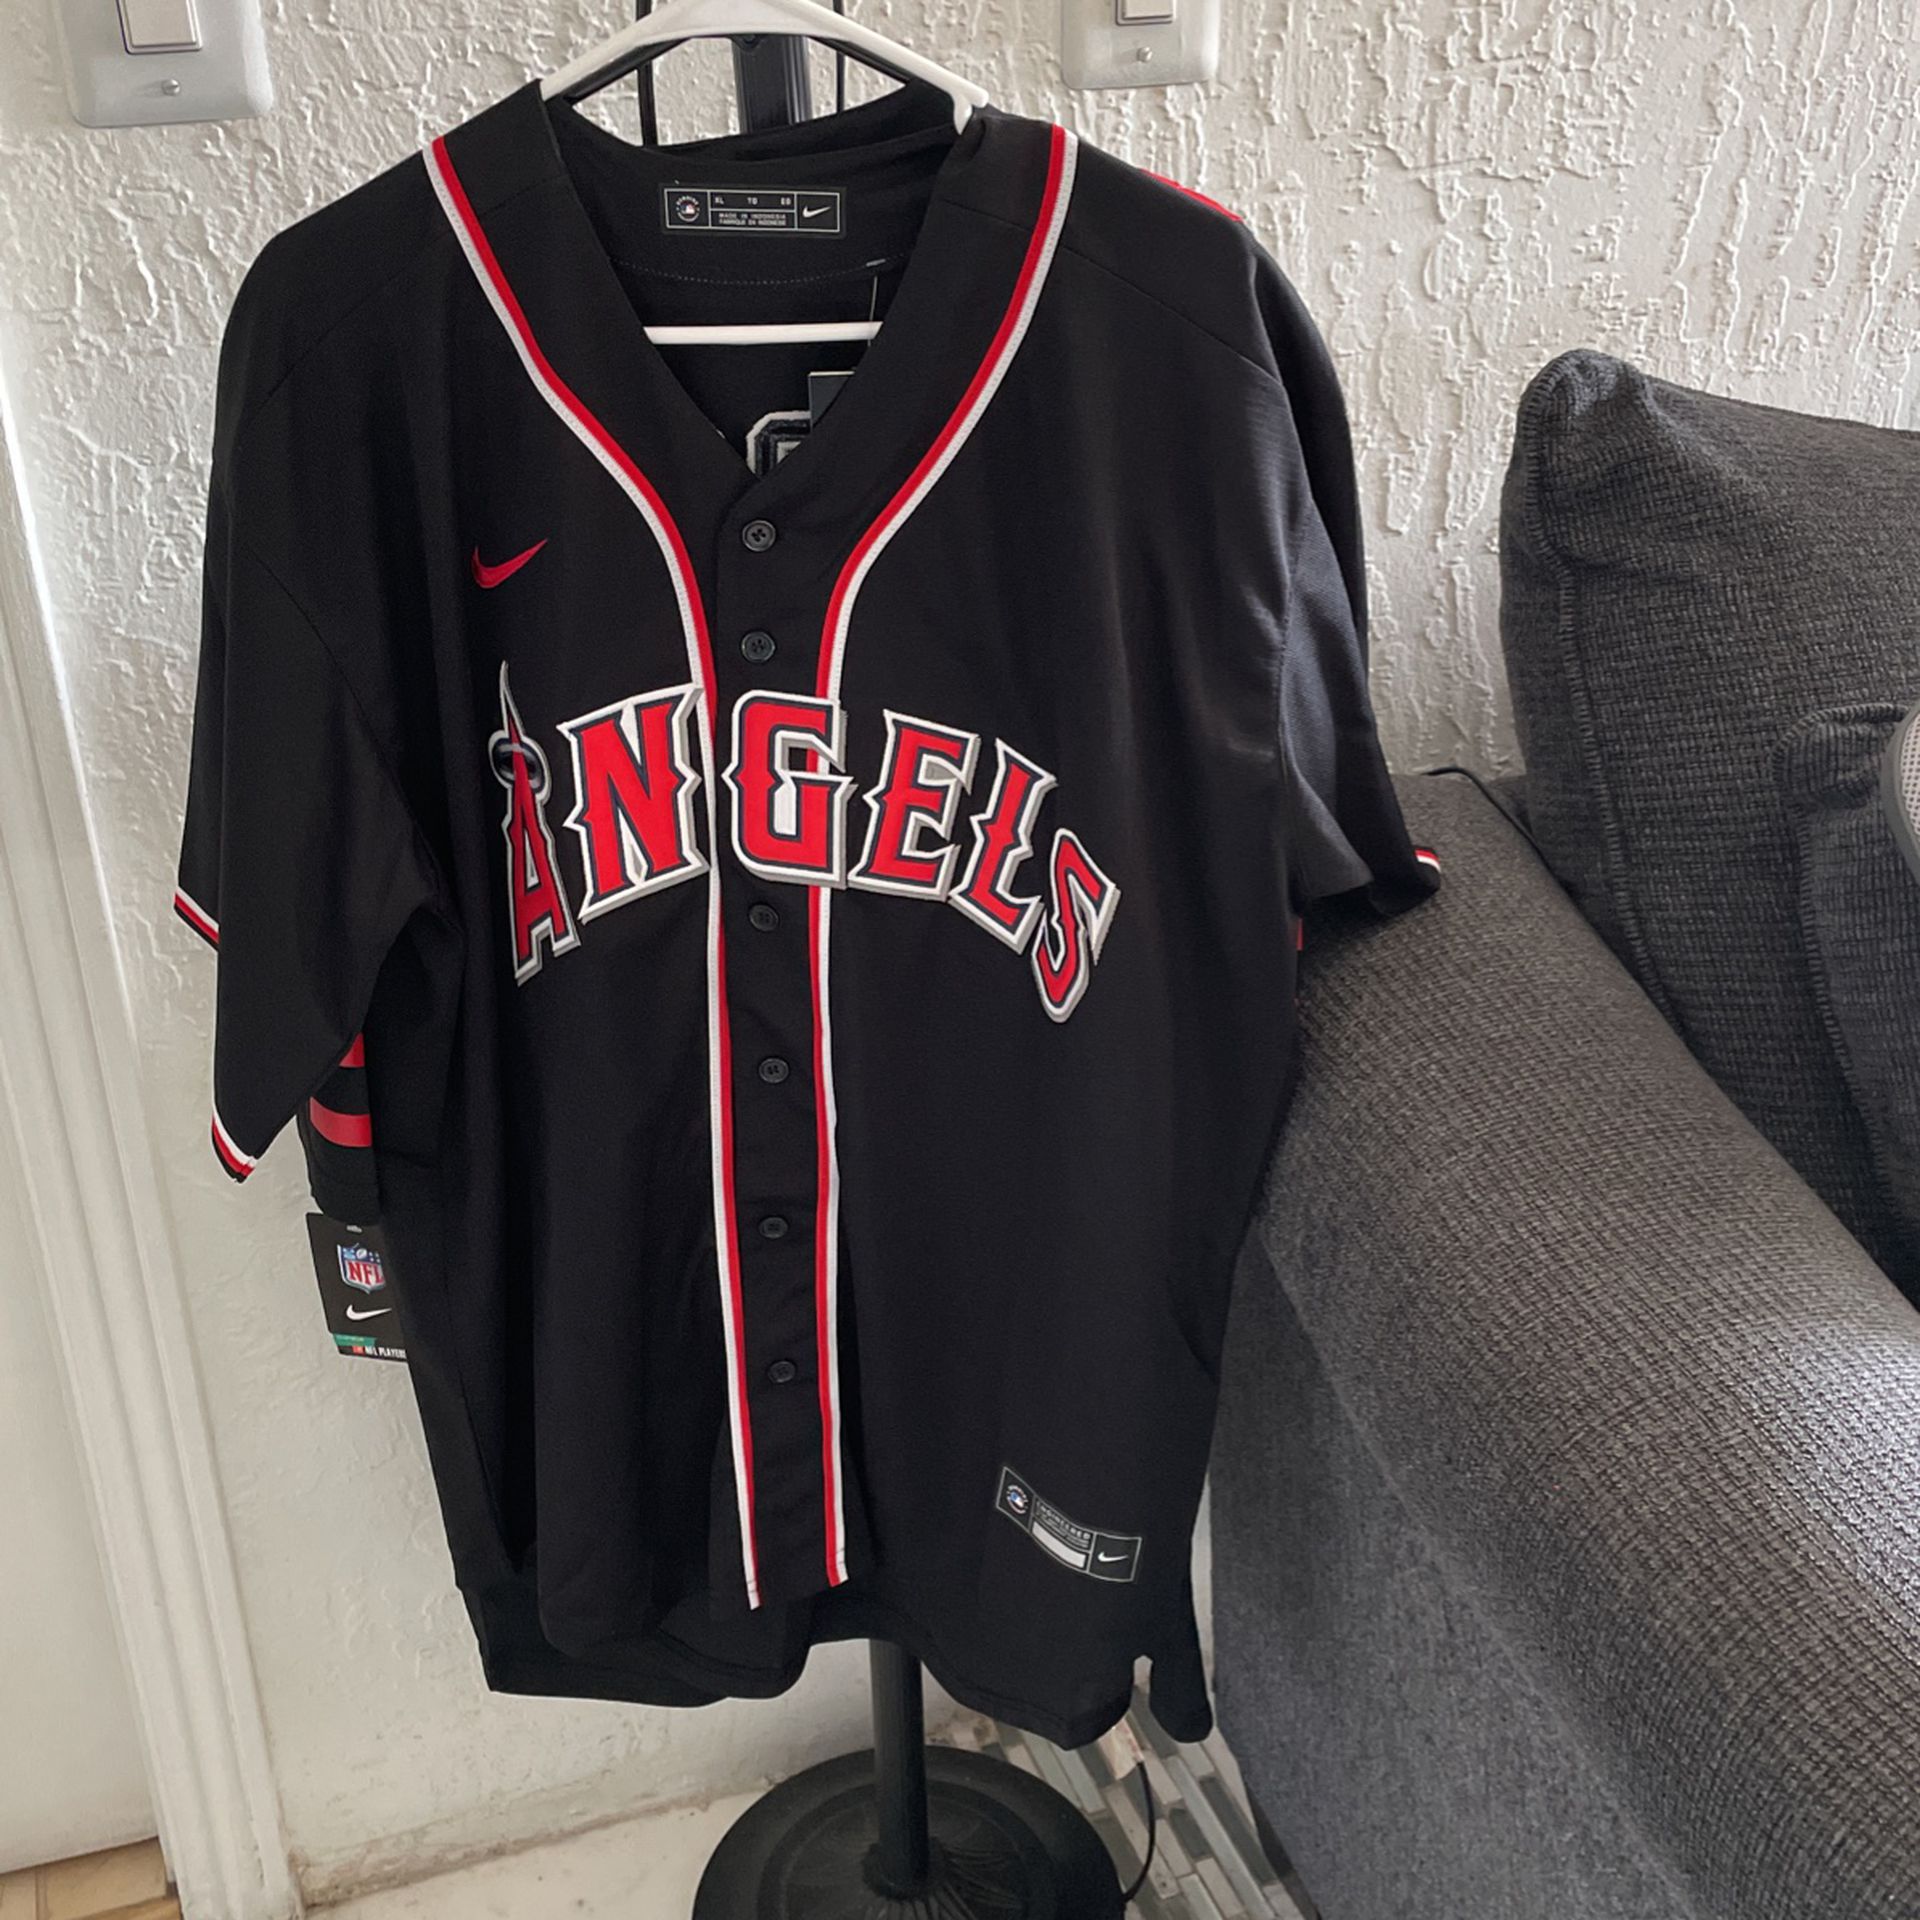 Anaheim Angels Baseball Jersey XL for Sale in Fullerton, CA - OfferUp